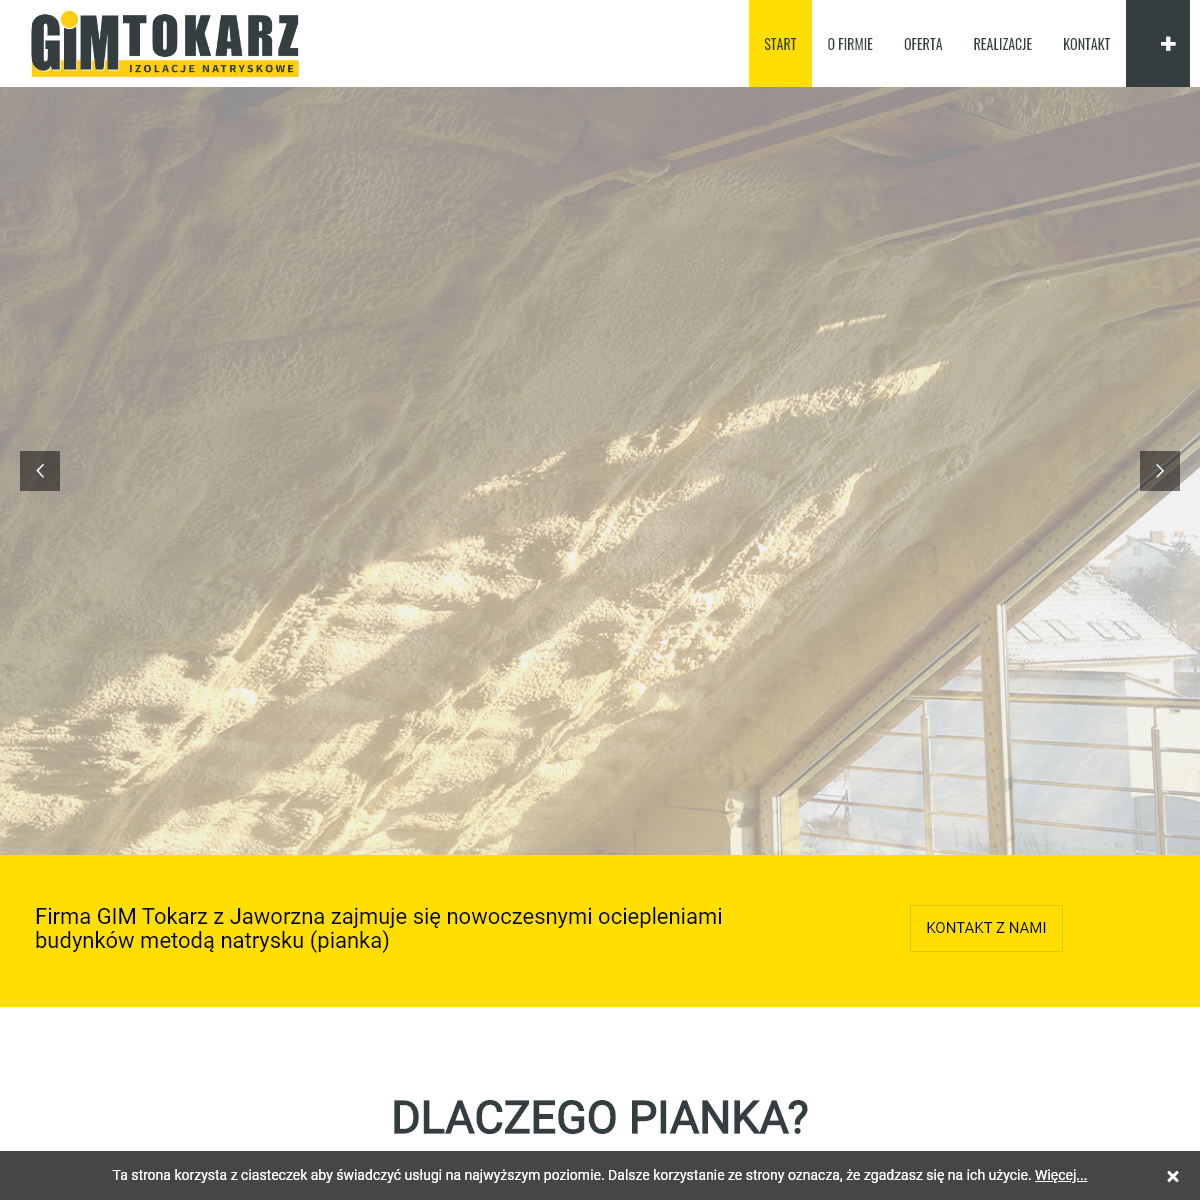 A complete backup of gimtokarz.pl